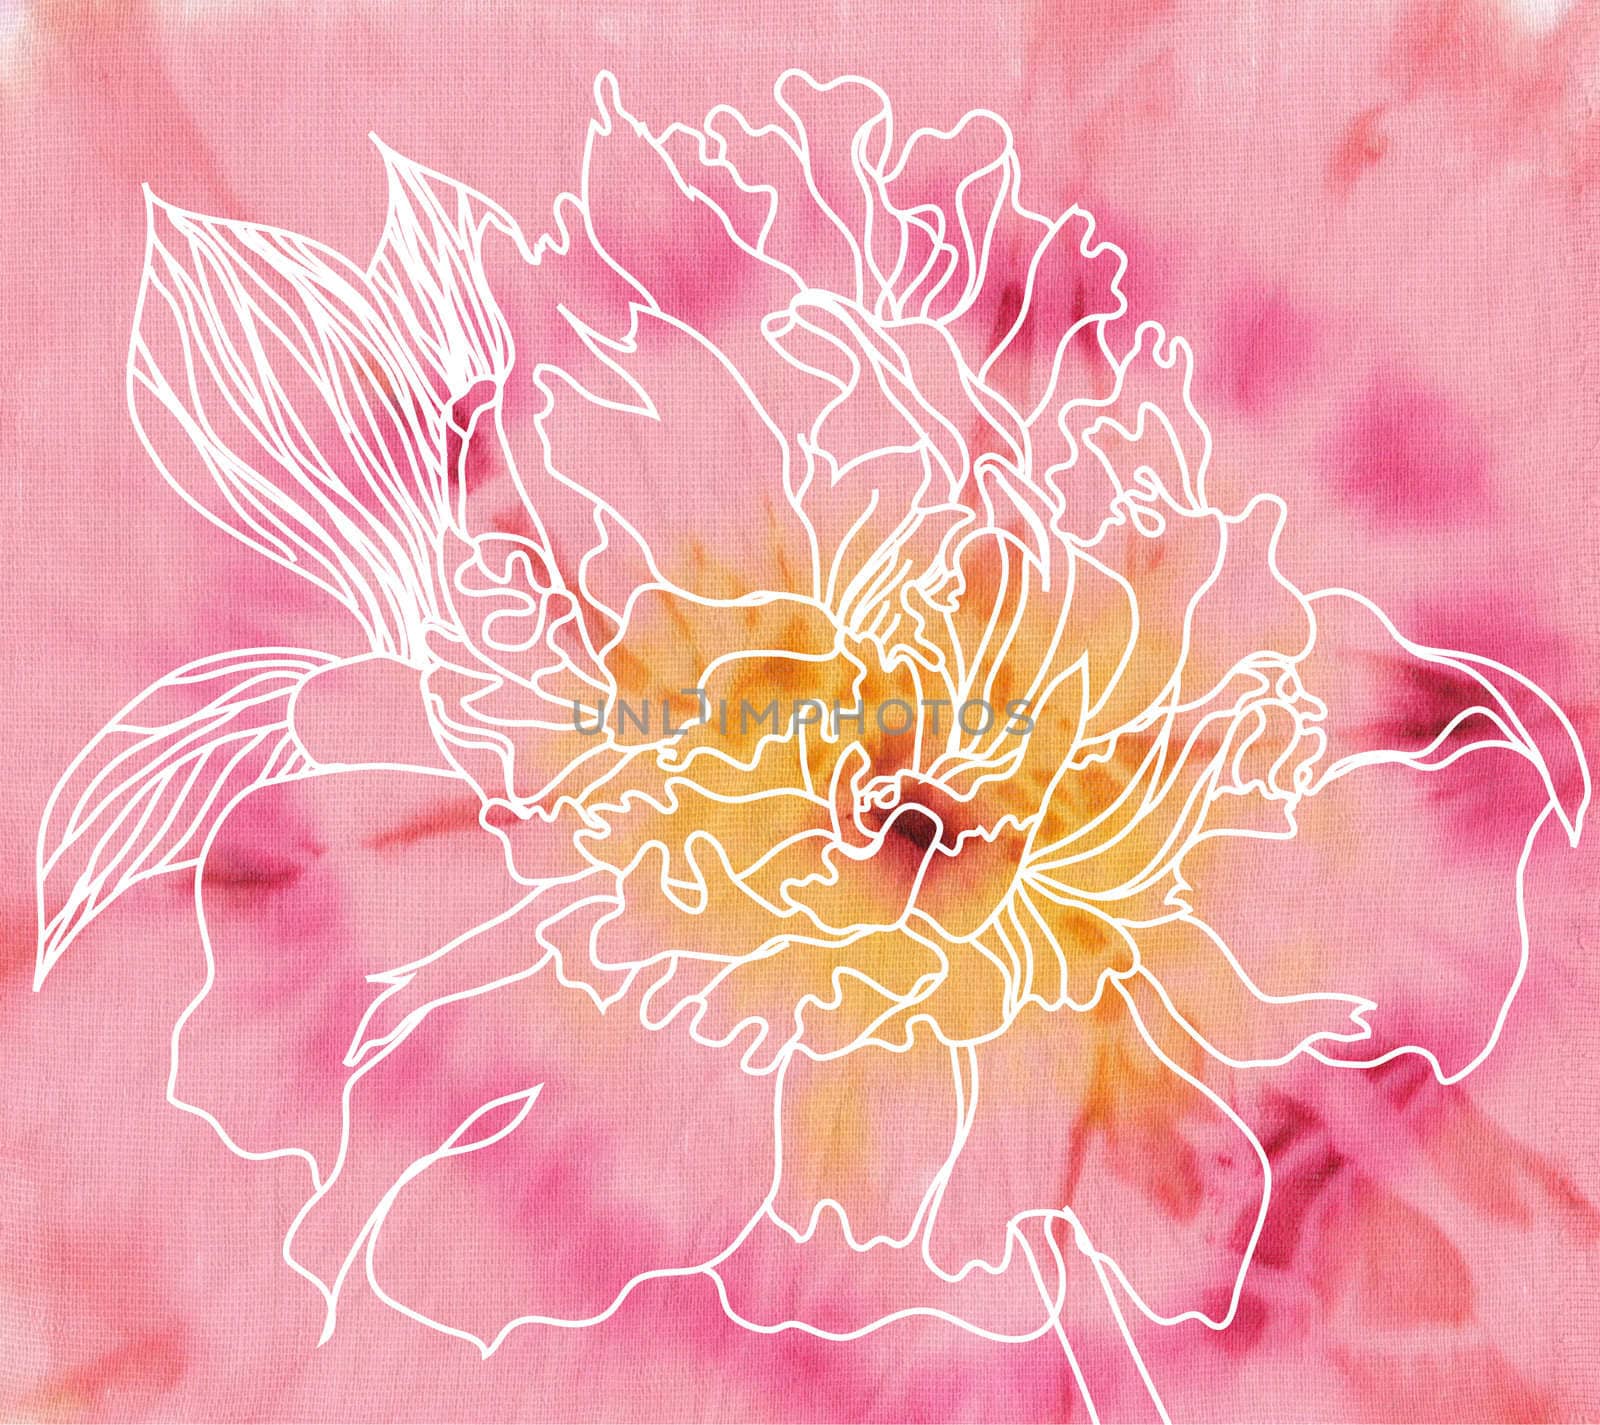 peony flower on batik background by vergasova